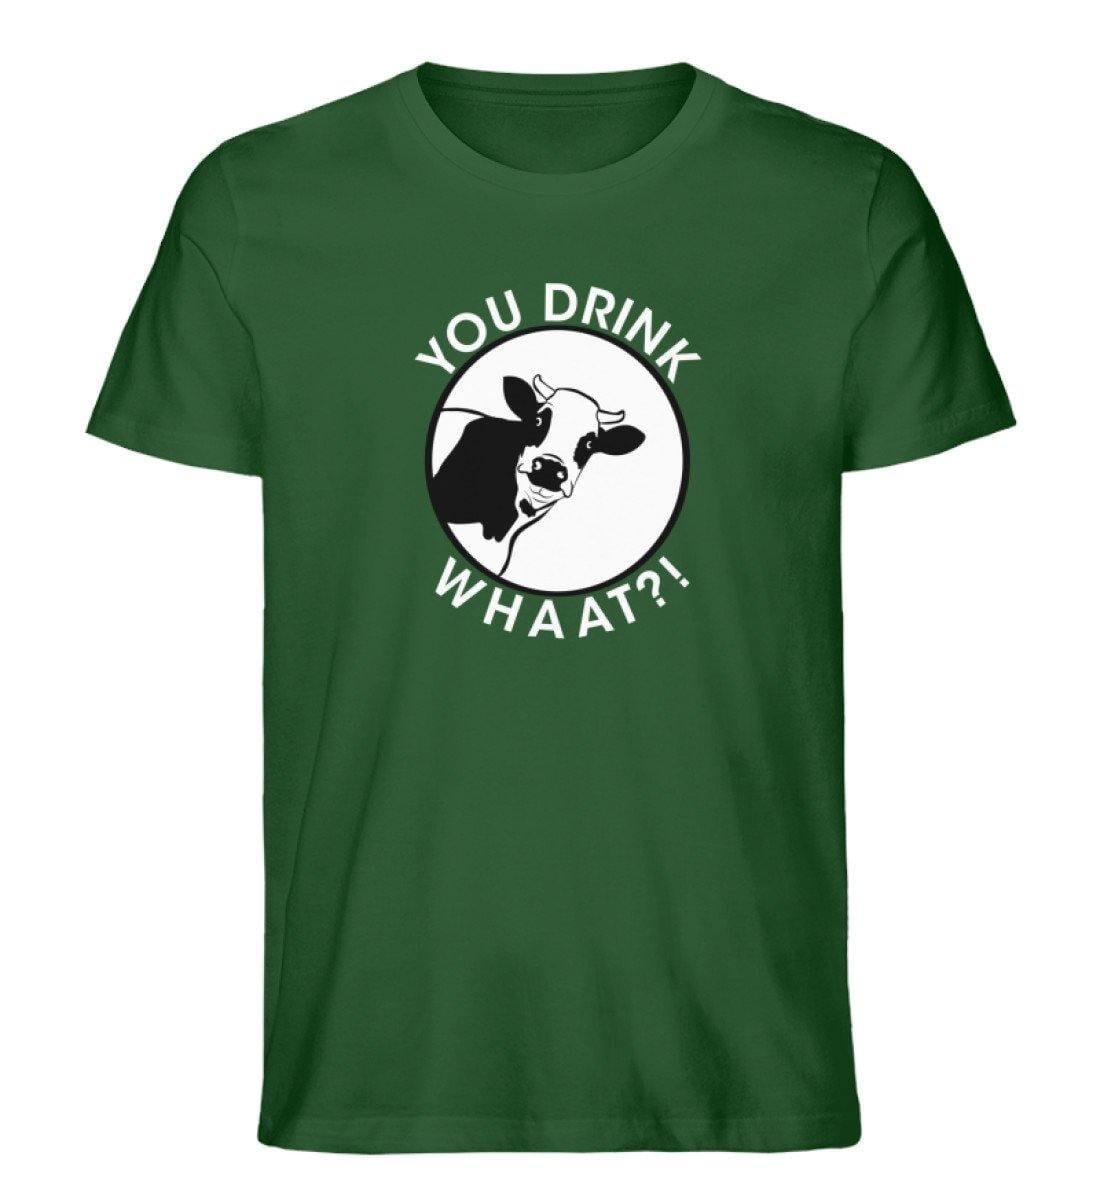 You drink whaat?! - Unisex Organic Shirt - Team Vegan © vegan t shirt